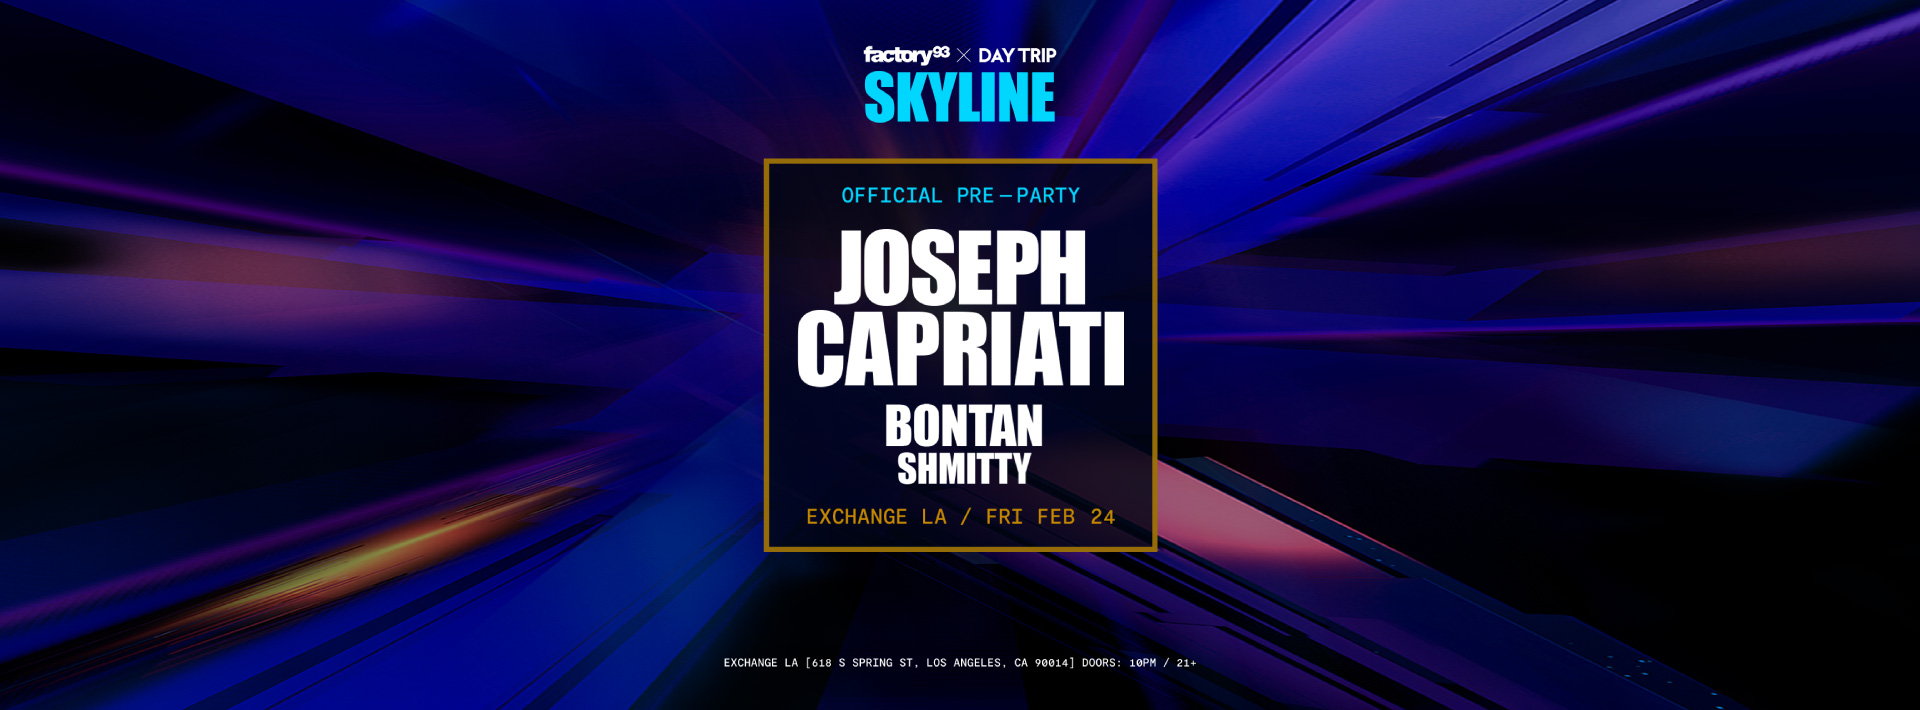 Skyline Preparty: Joseph Capriati